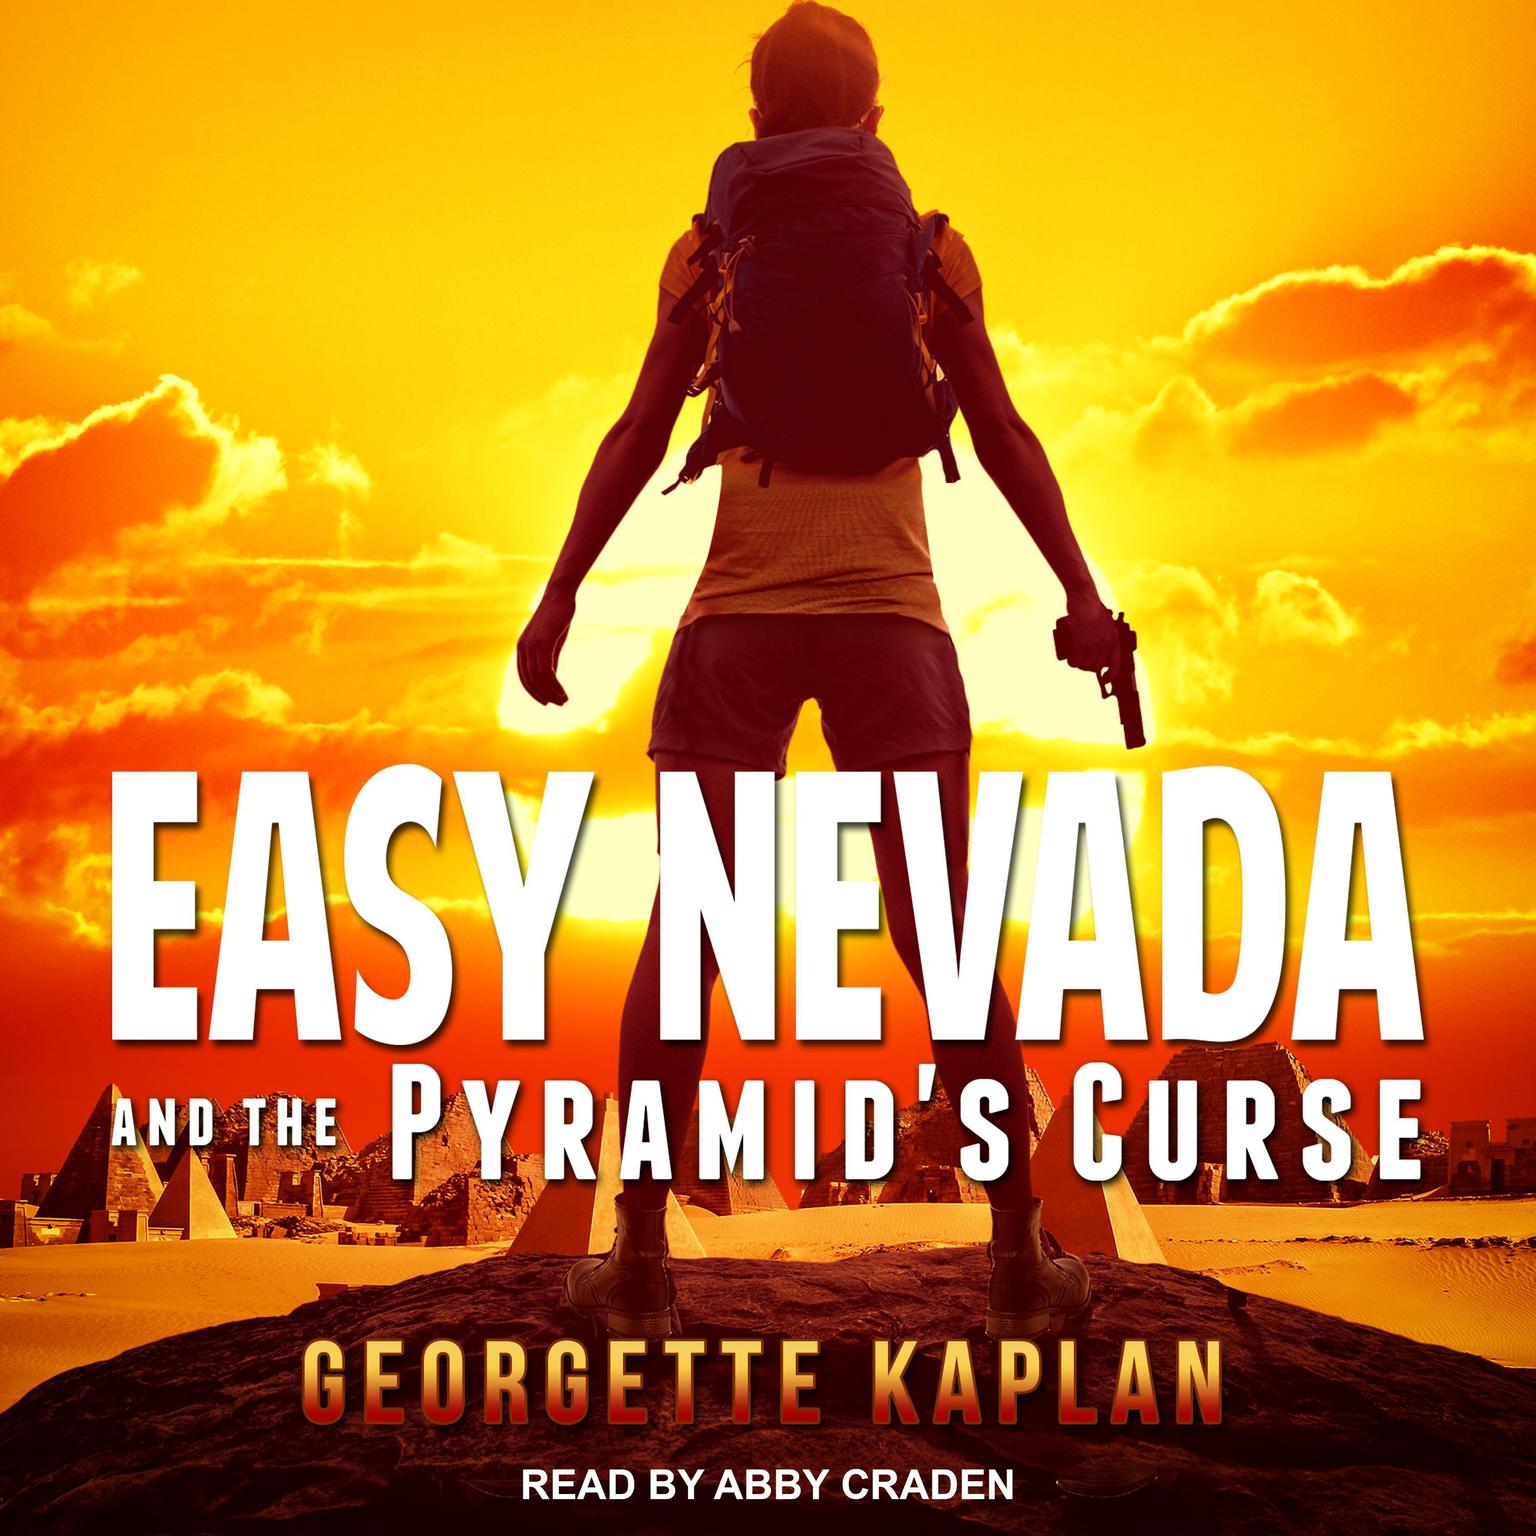 Georgette Kaplan, Abby Craden: Easy Nevada and the Pyramid's Curse (AudiobookFormat, 2020, Ylva)